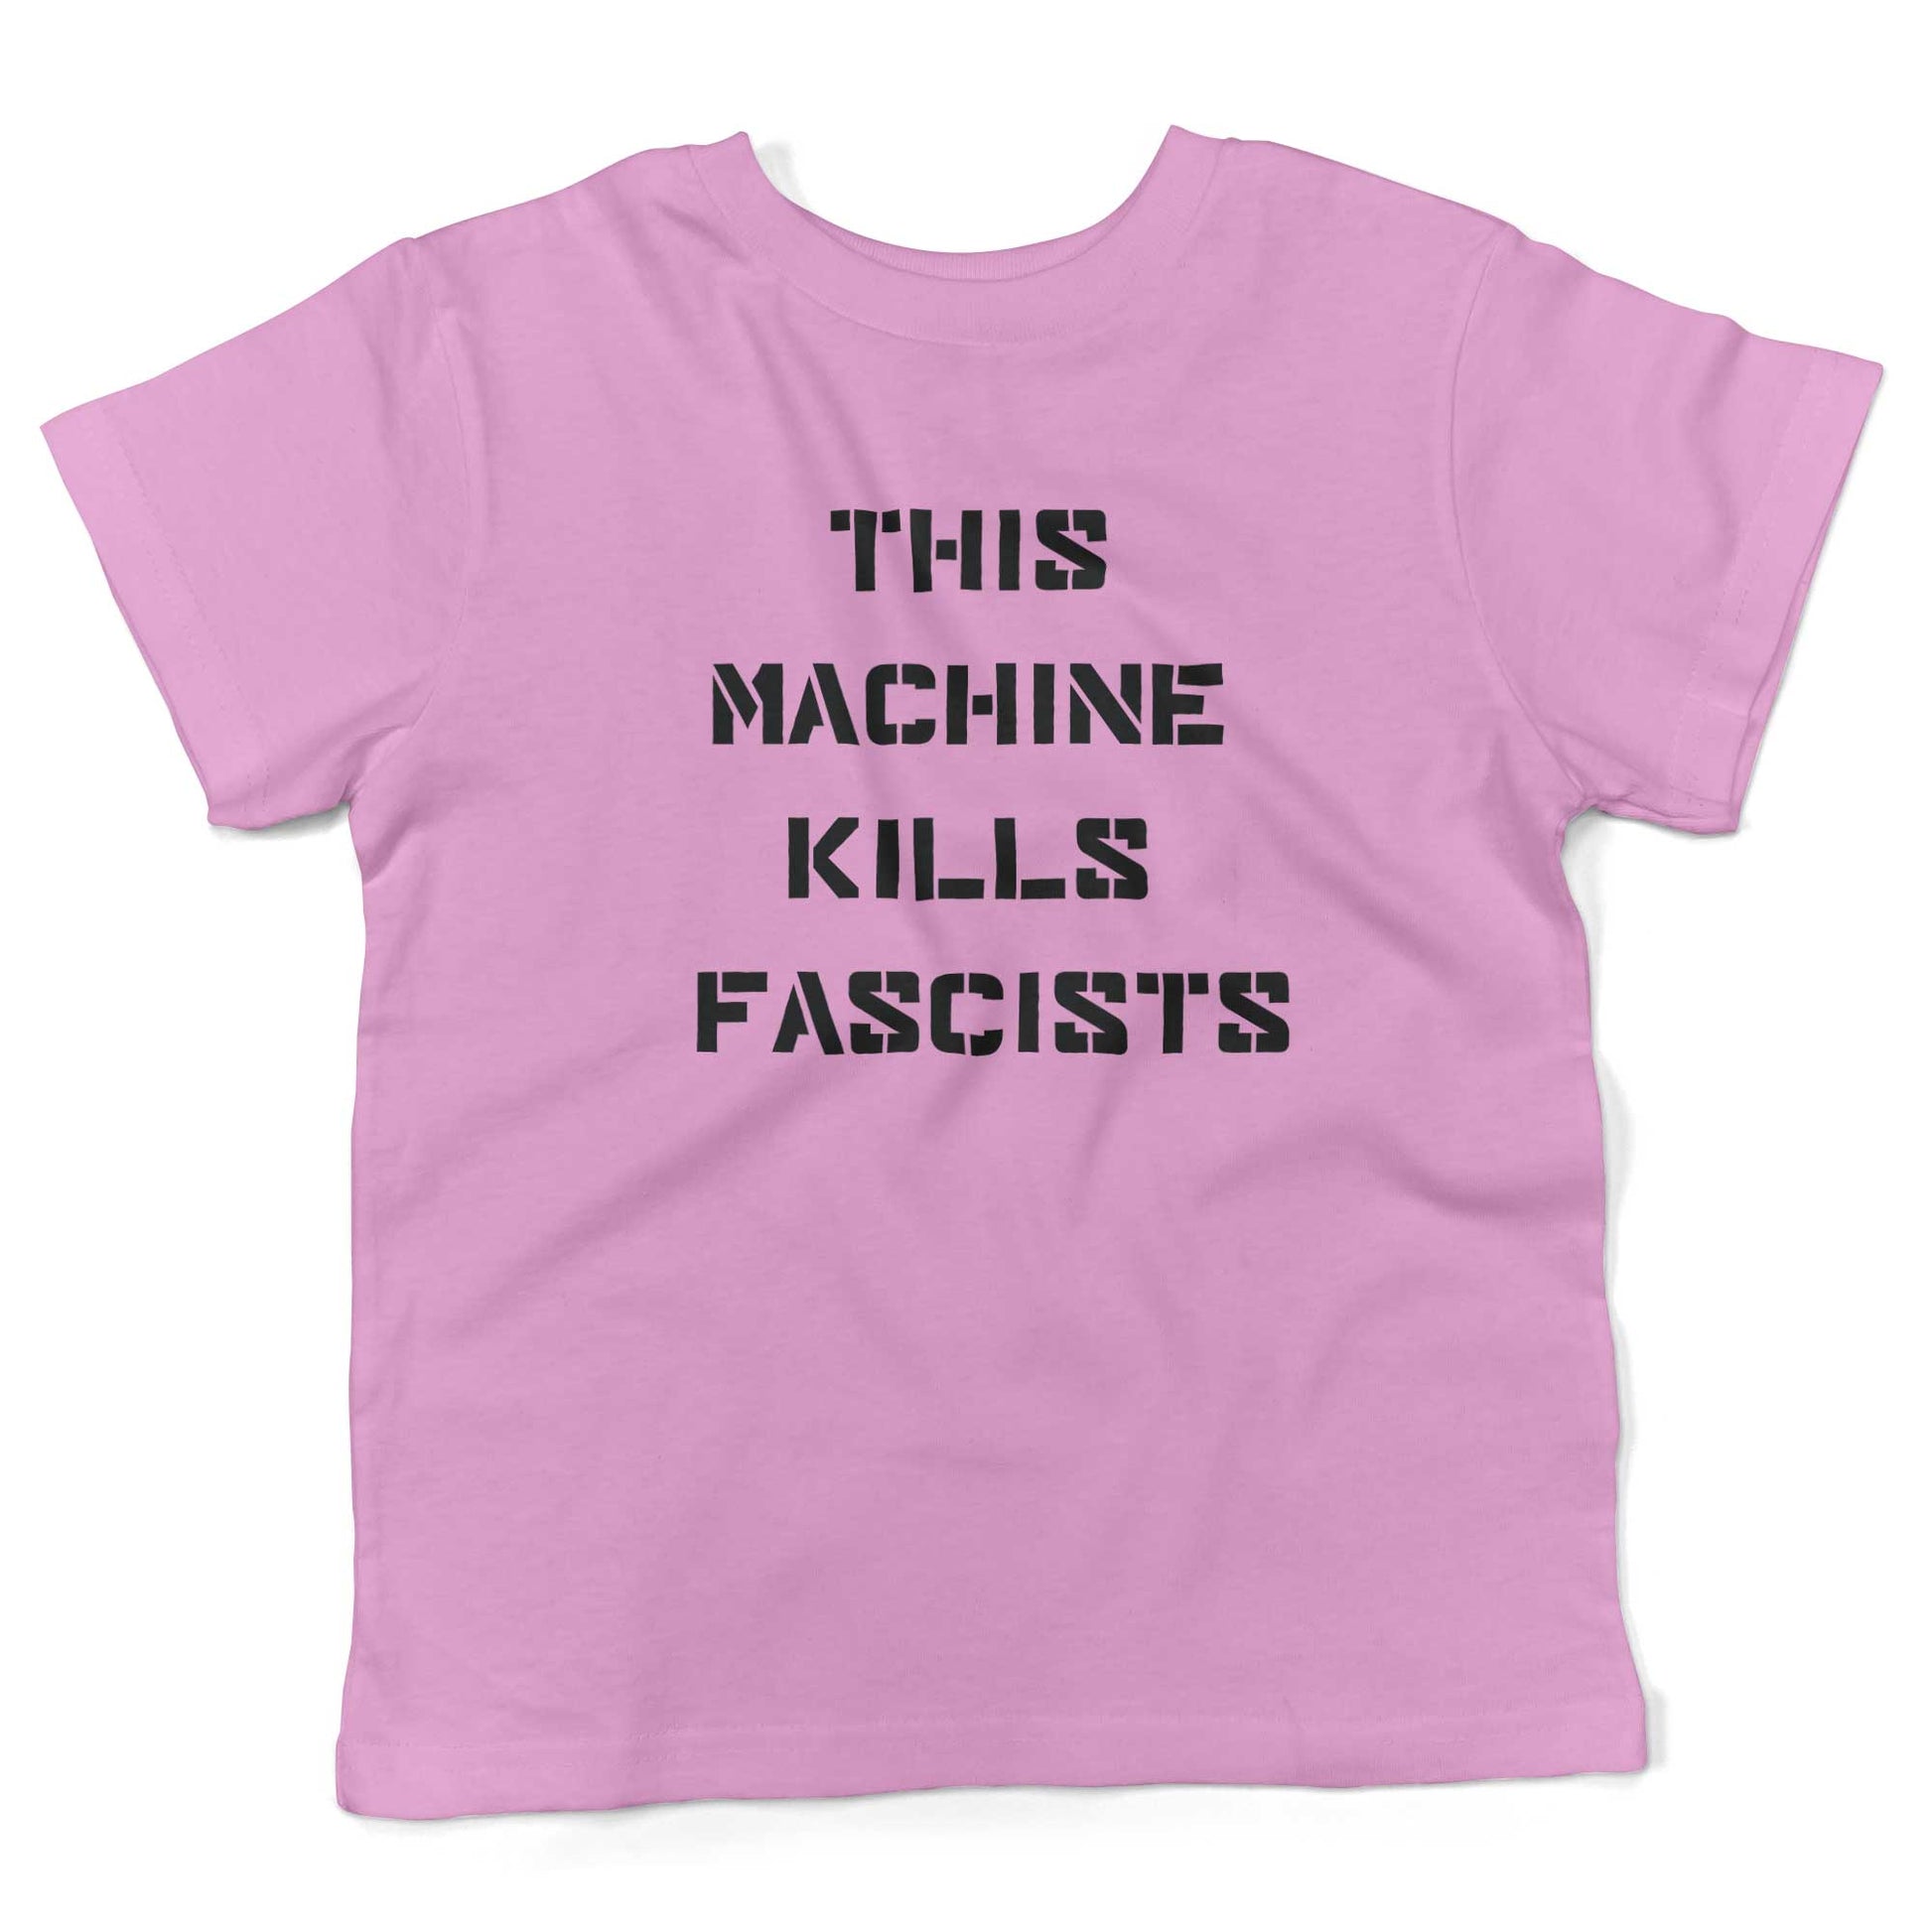 This Machine Kills Fascists Toddler Shirt-Organic Pink-2T